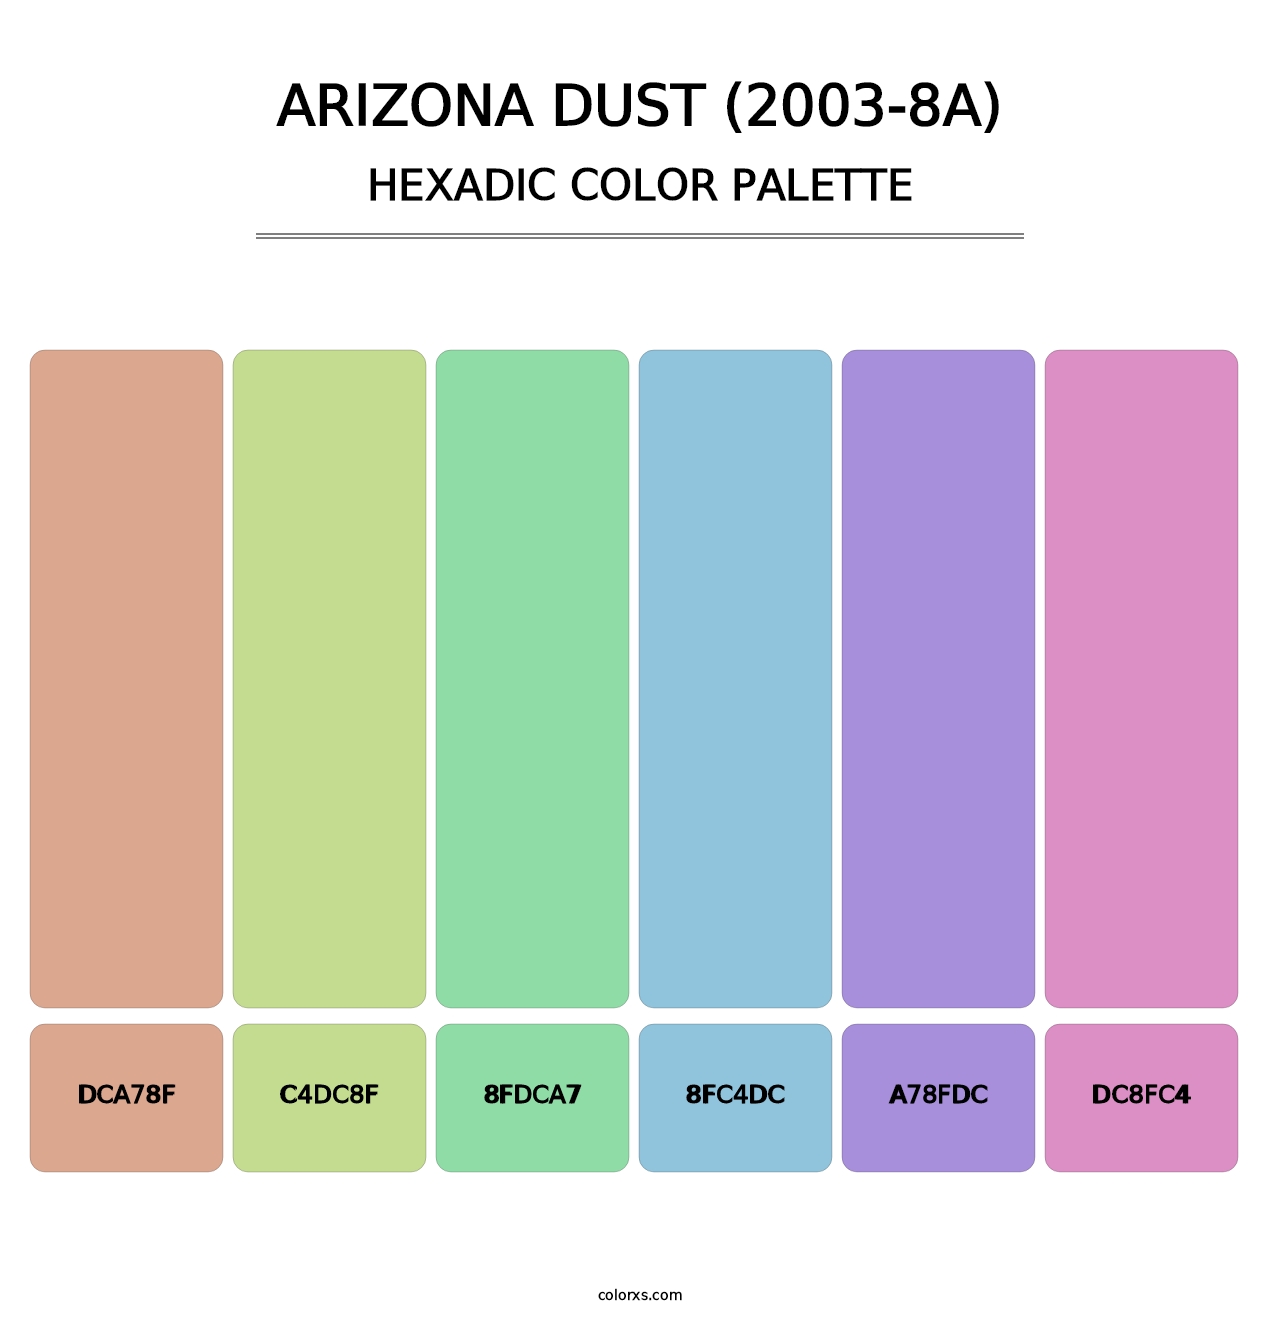 Arizona Dust (2003-8A) - Hexadic Color Palette